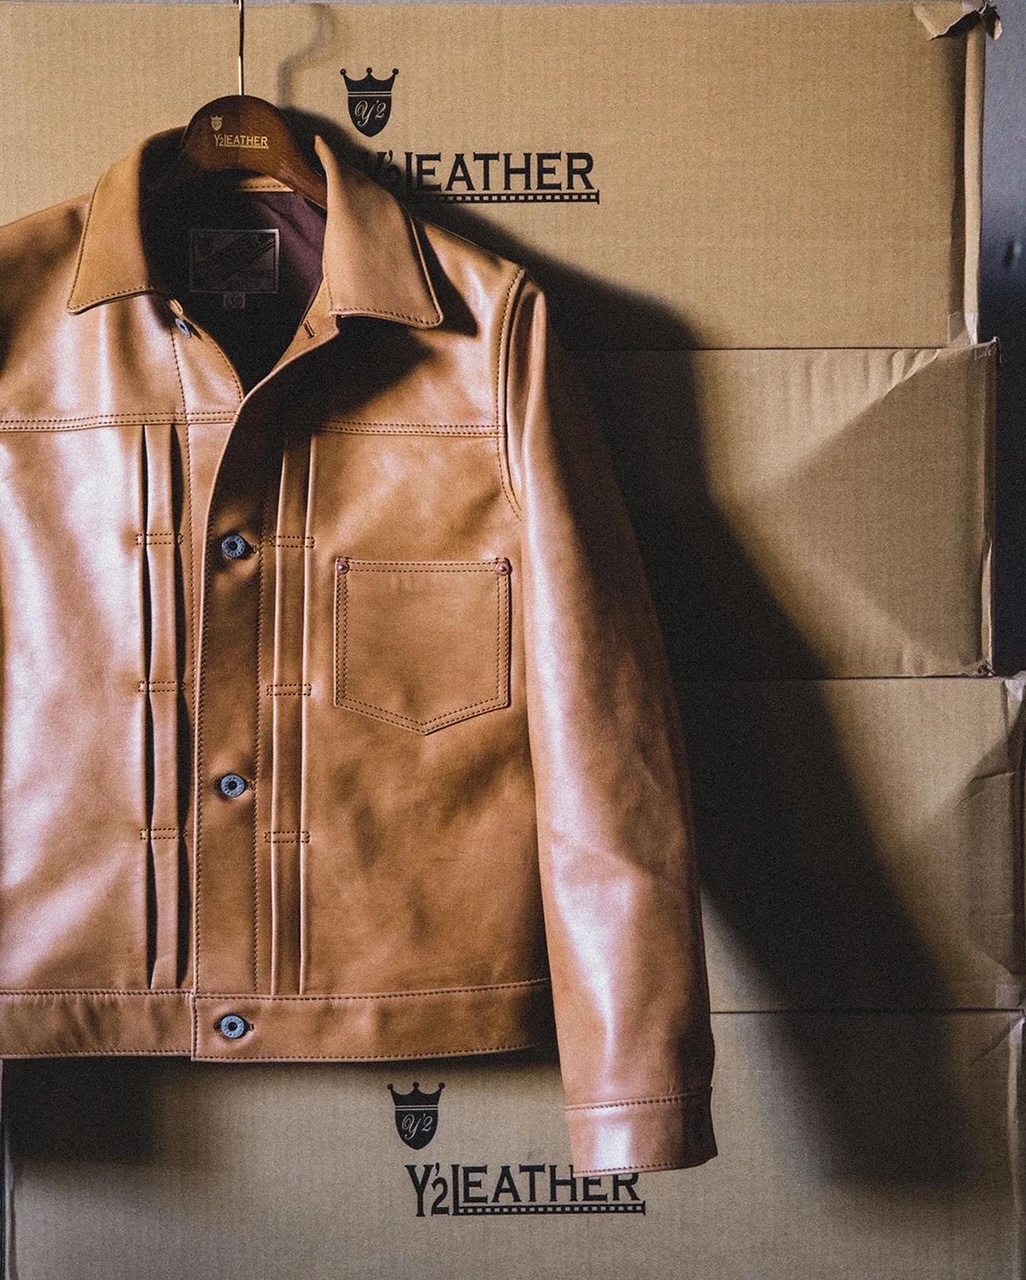 Regarding companystore inventory leather jacket brand